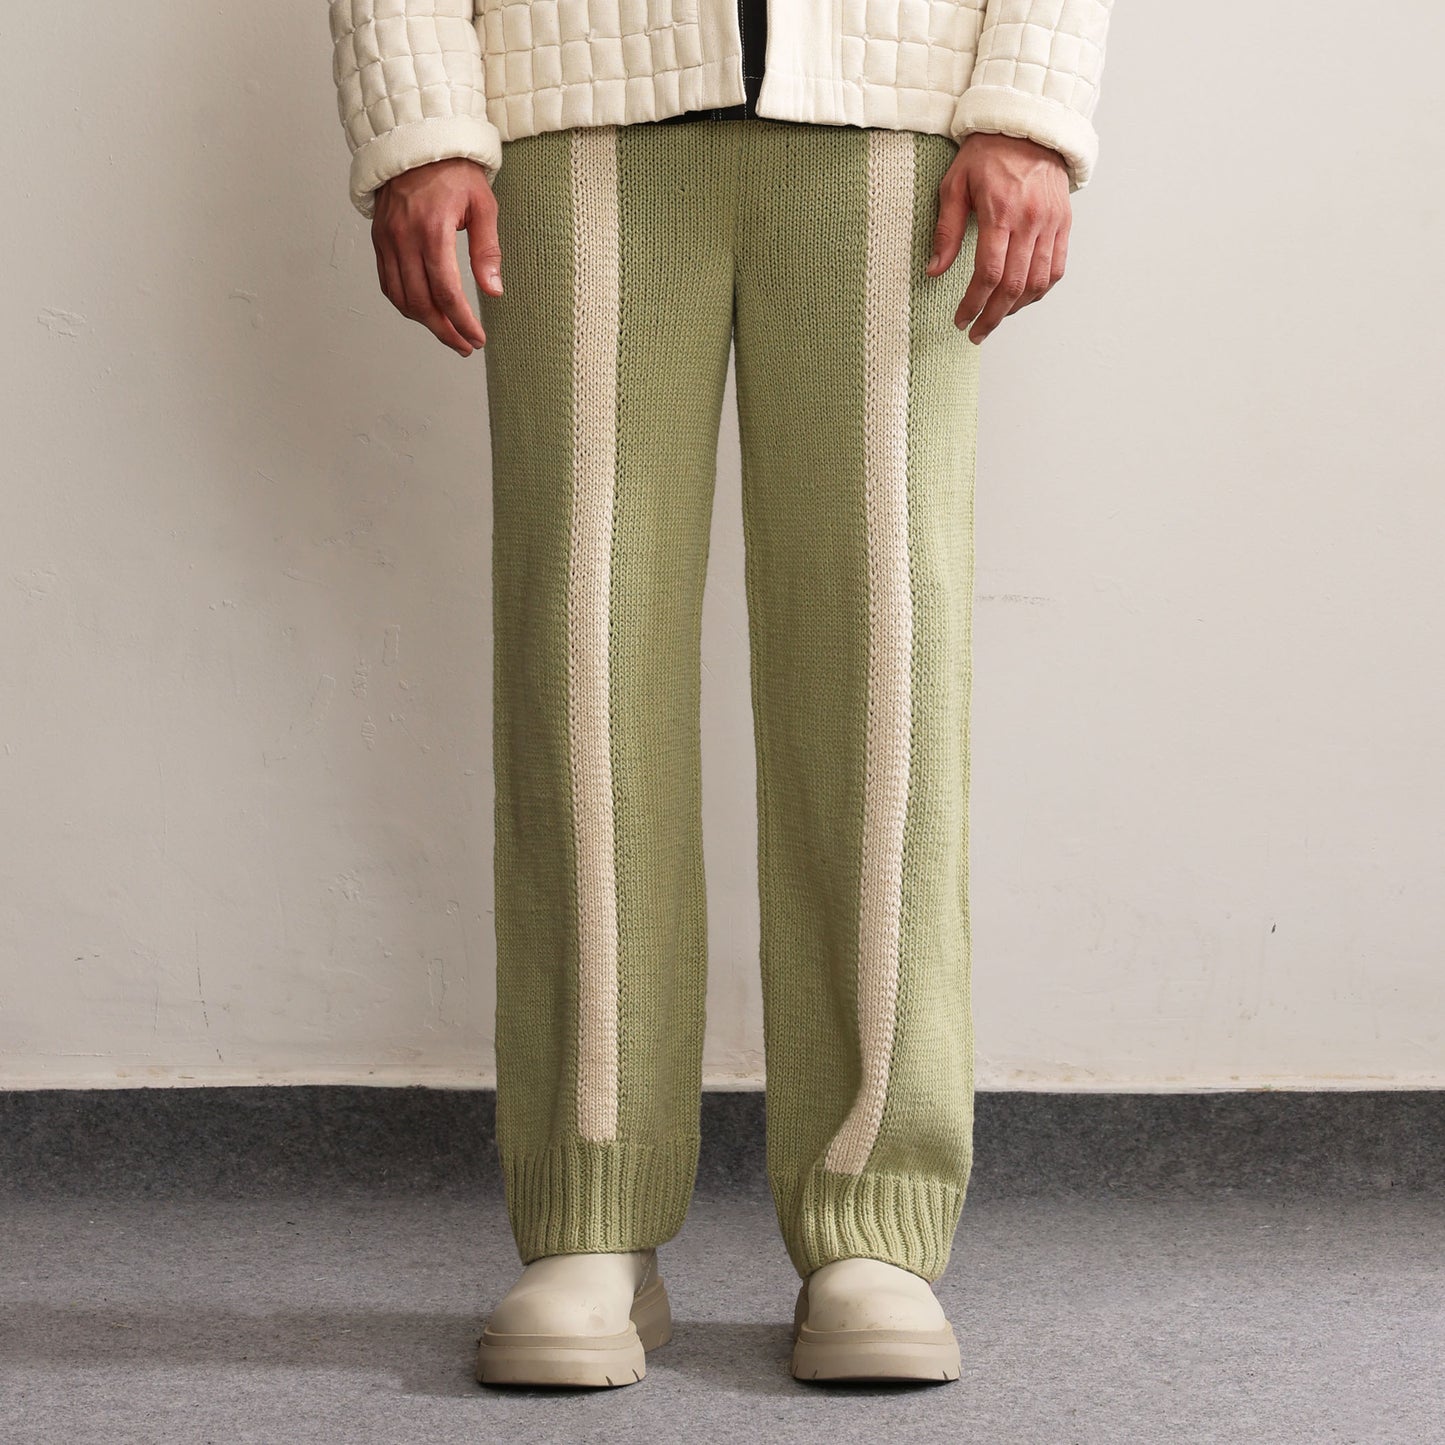 Fibula Striped Hand-knitted Pants- Pista Green